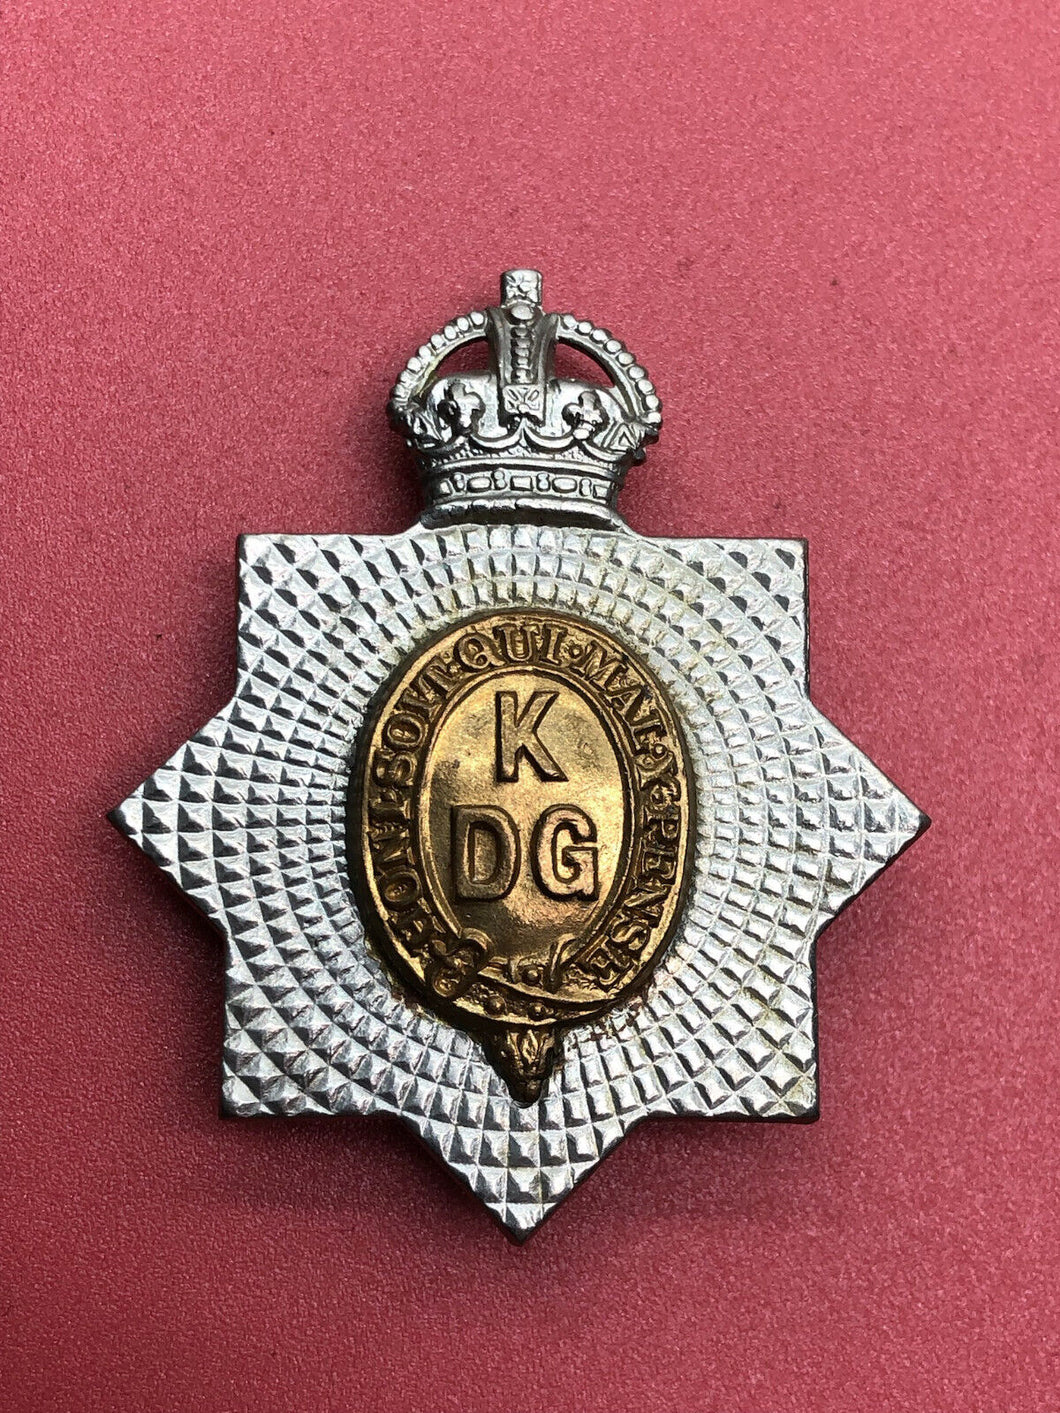 Original WW2 British Army Cap Badge - Kings Dragoon Guards Regiment